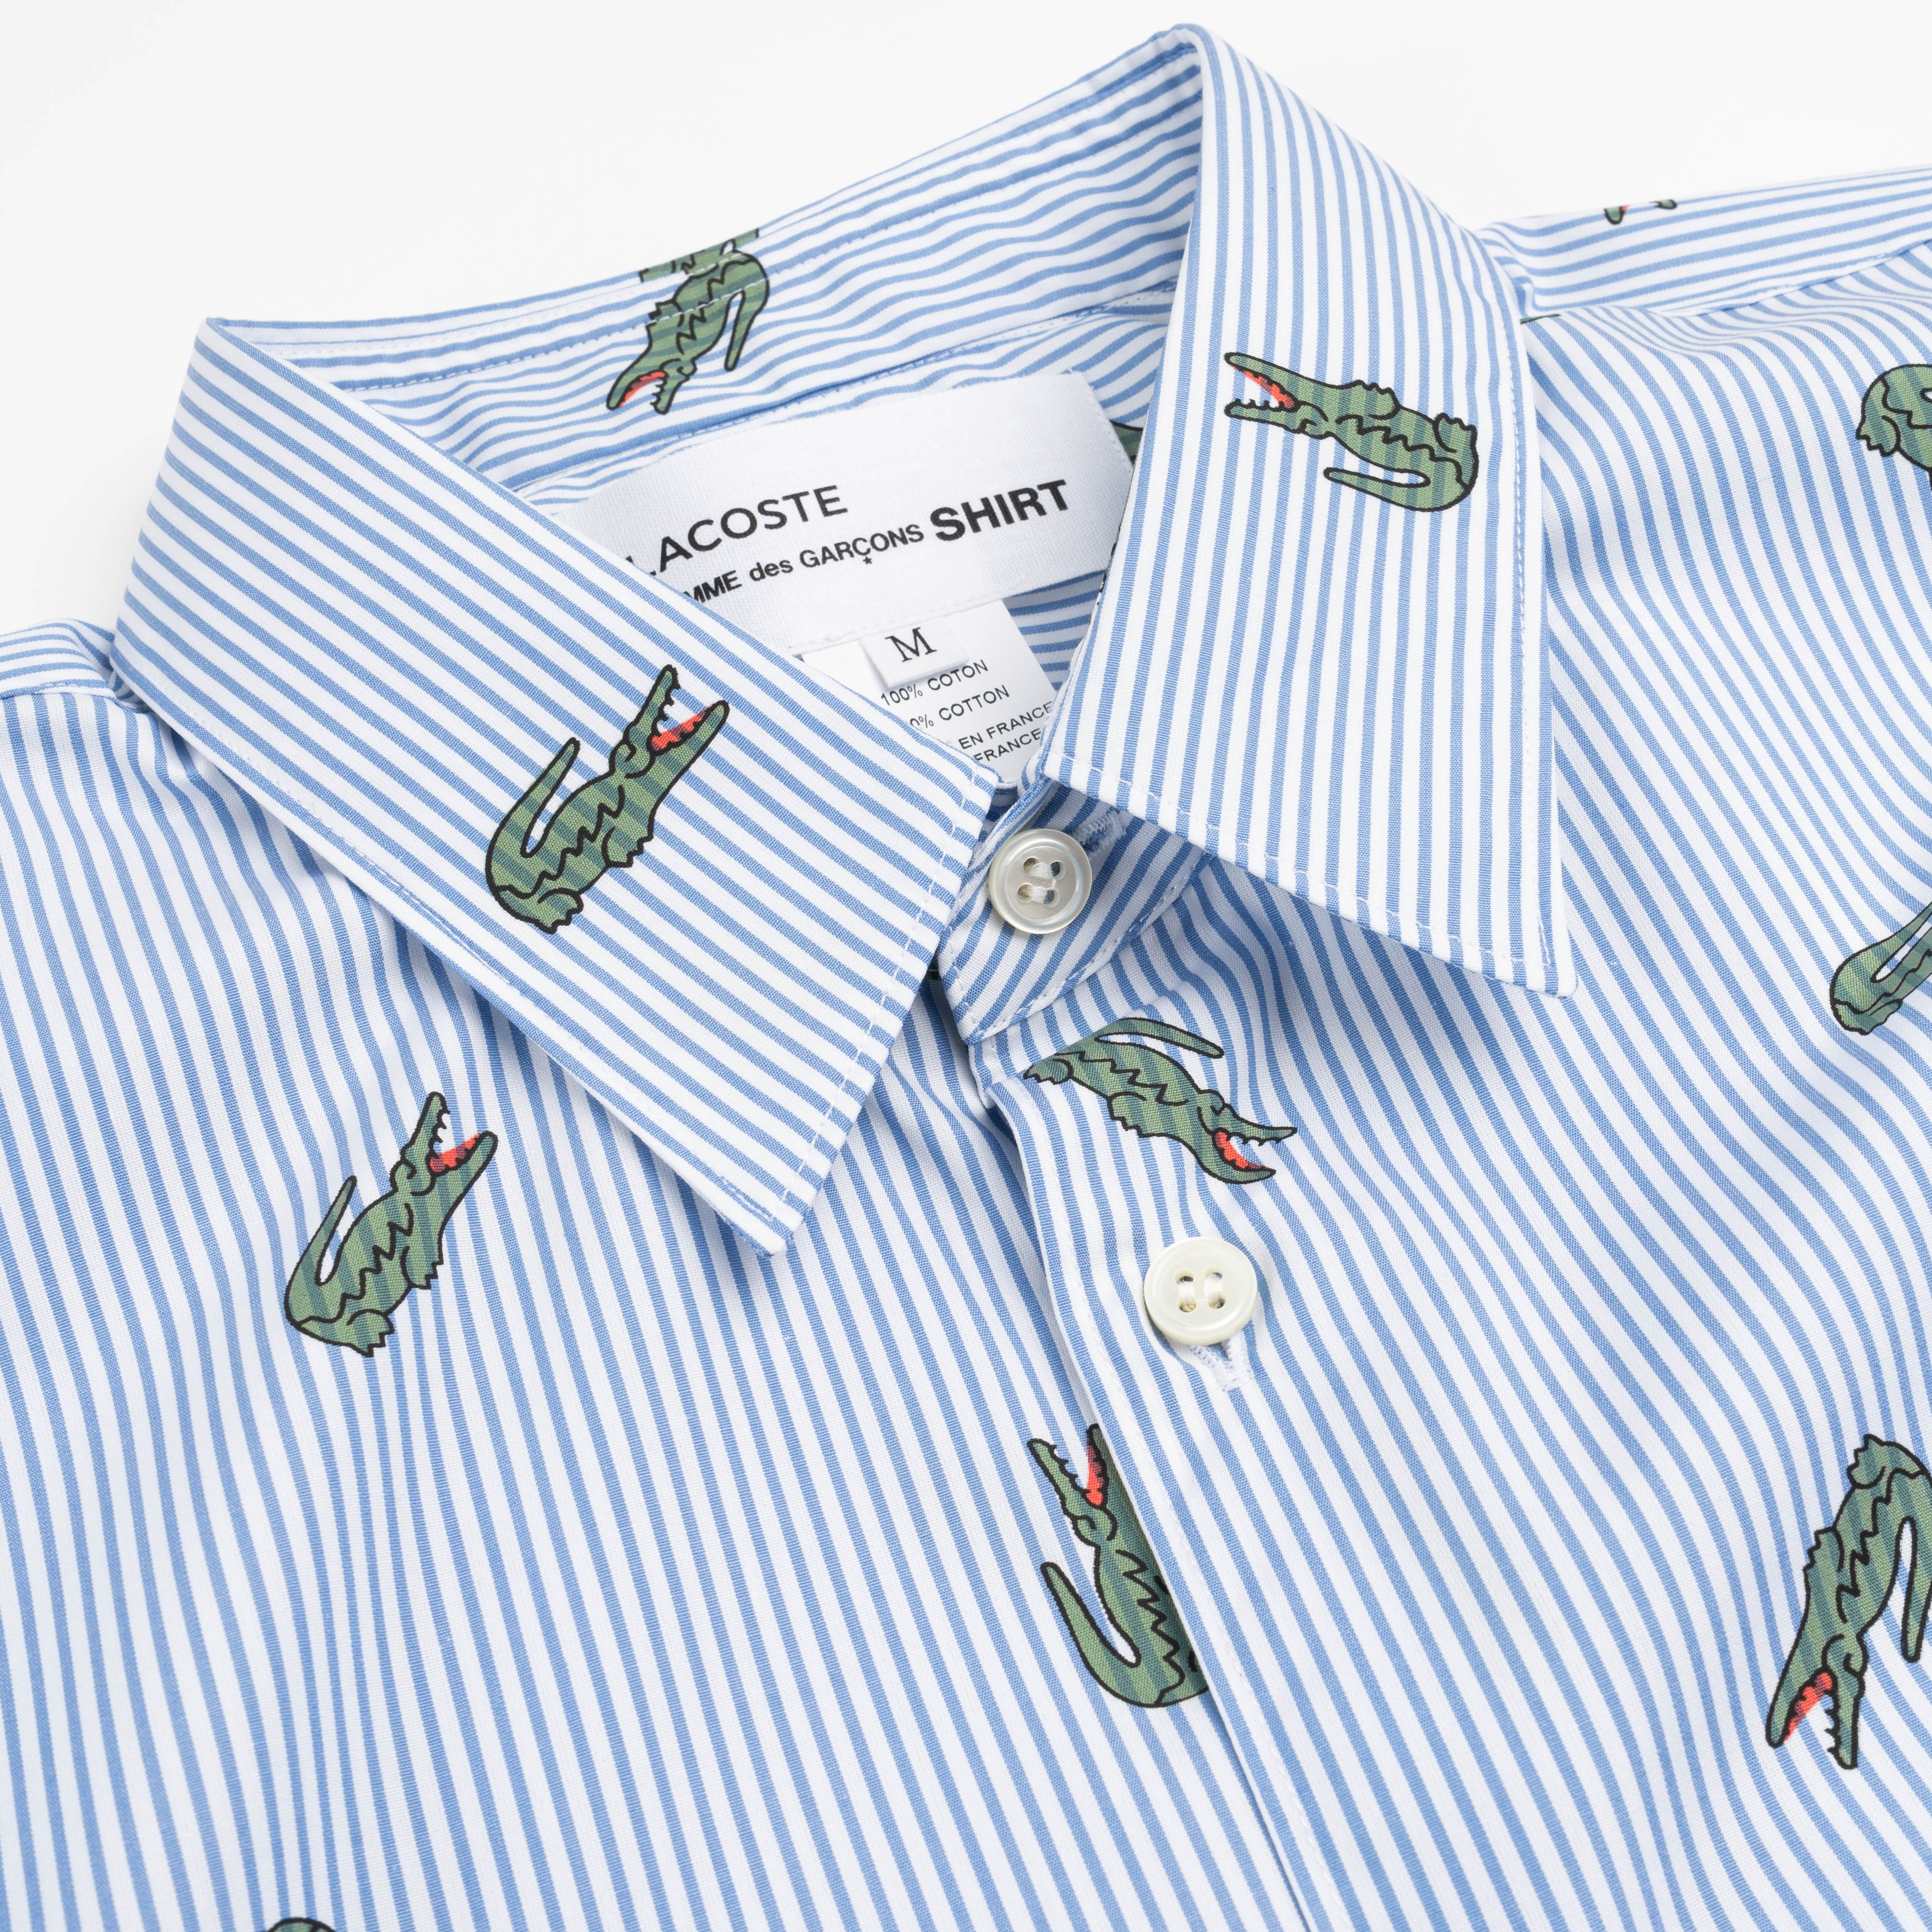 CDG SHIRT Lacoste Print Shirt FL-B004-W23 Blue Stripe